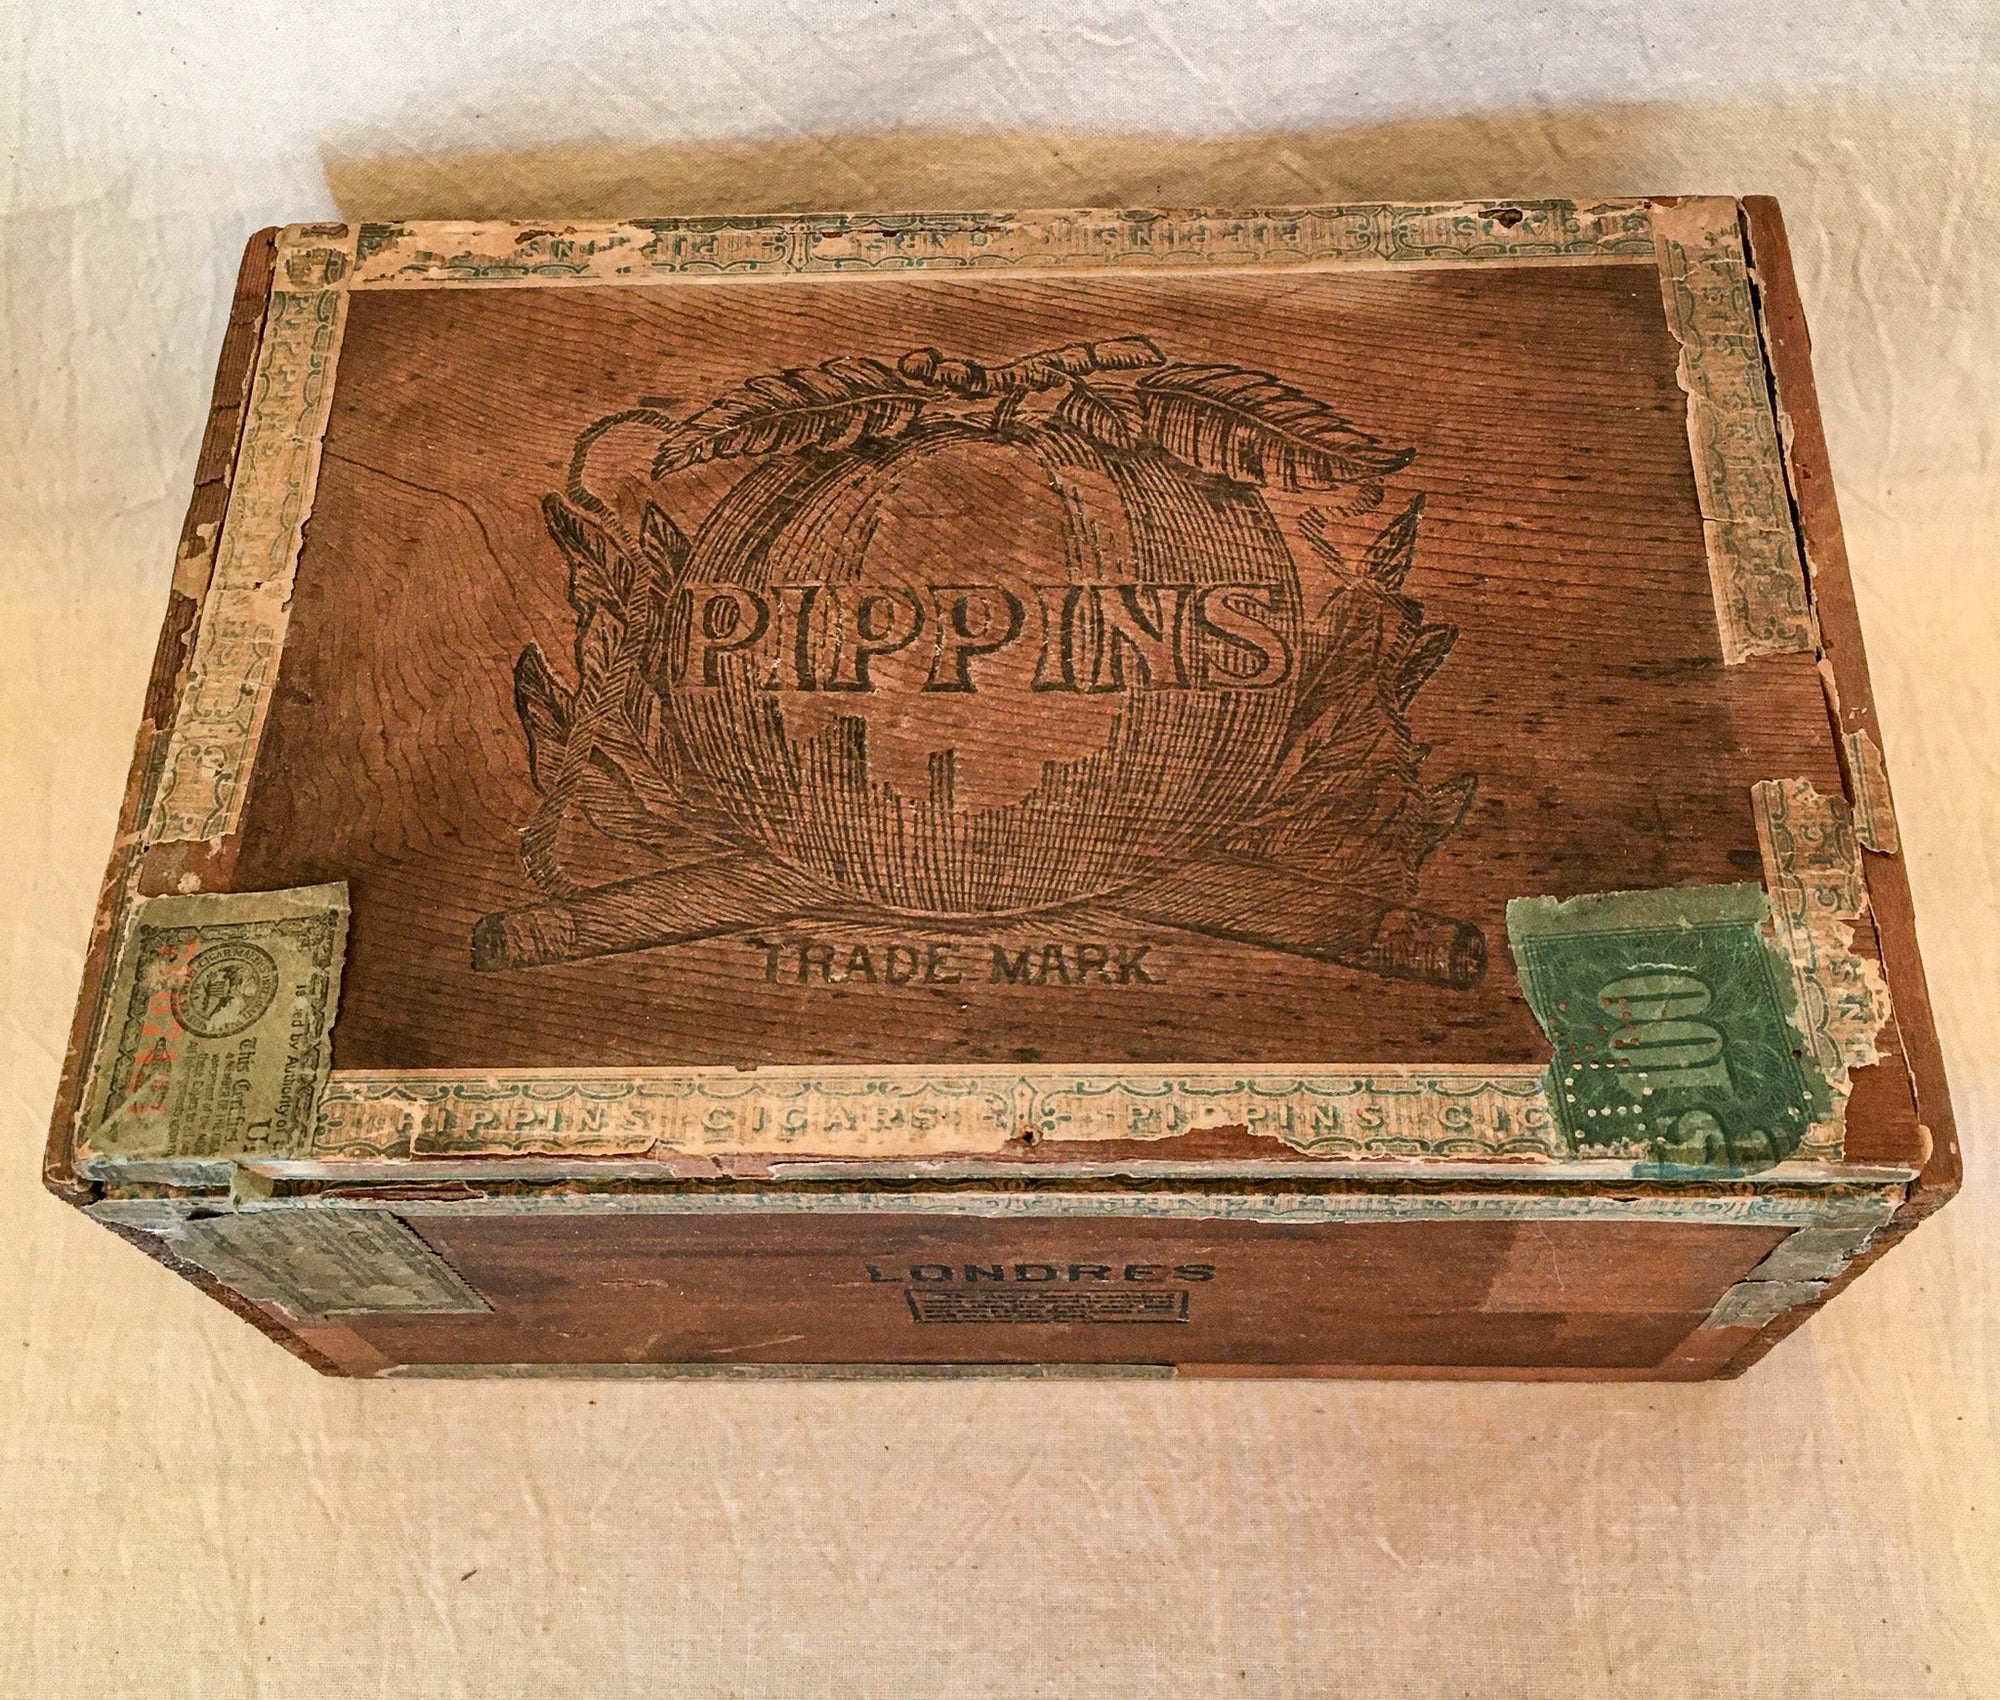 1909 Pippins Wooden Store Display Box – Boston, Mass.